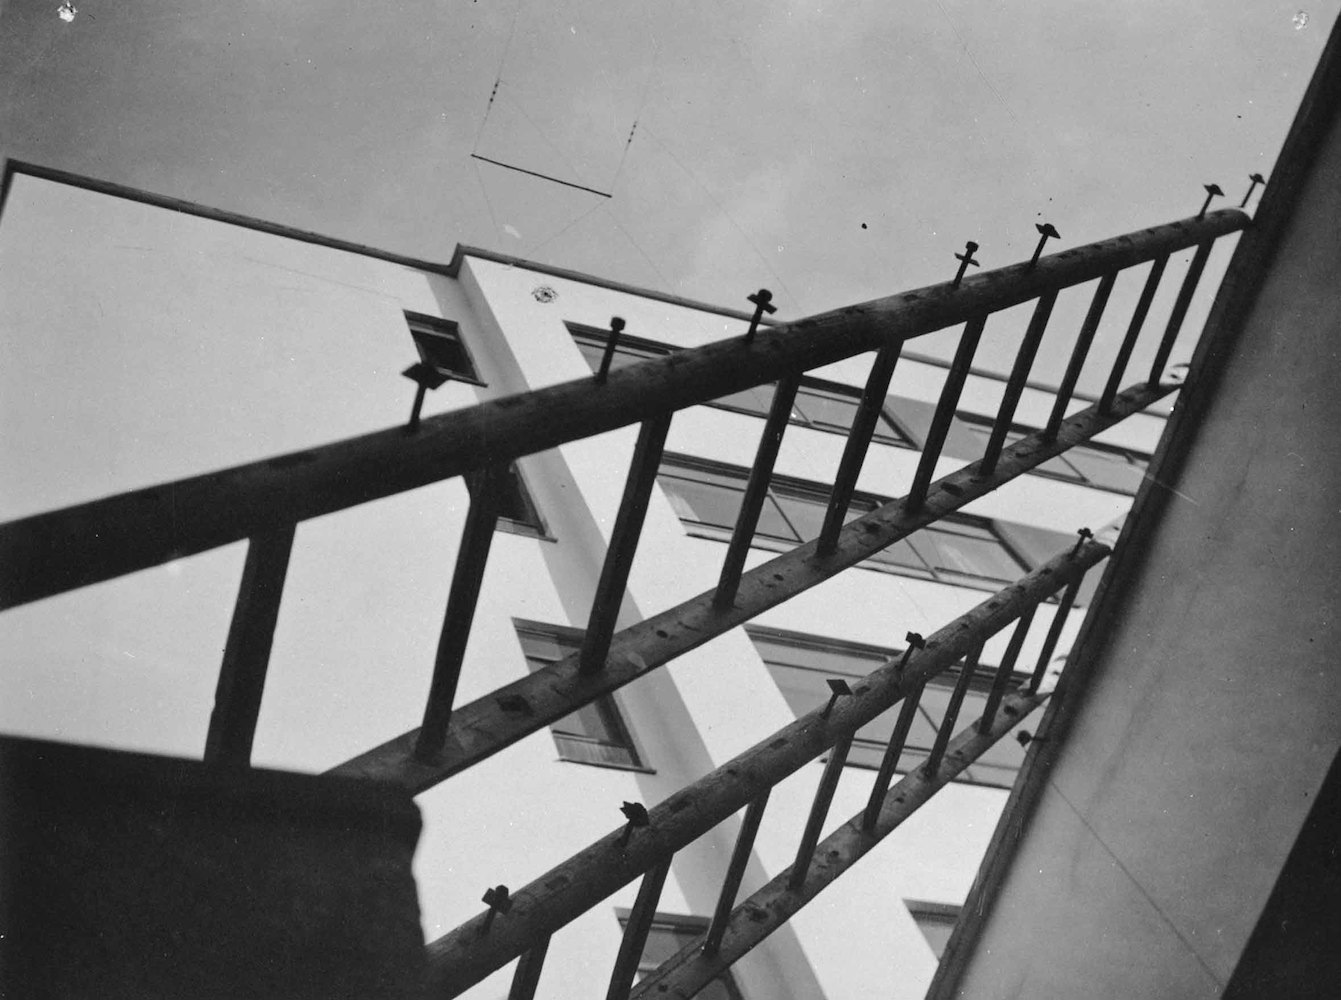 Bauhaus building, looking up, view through ladders